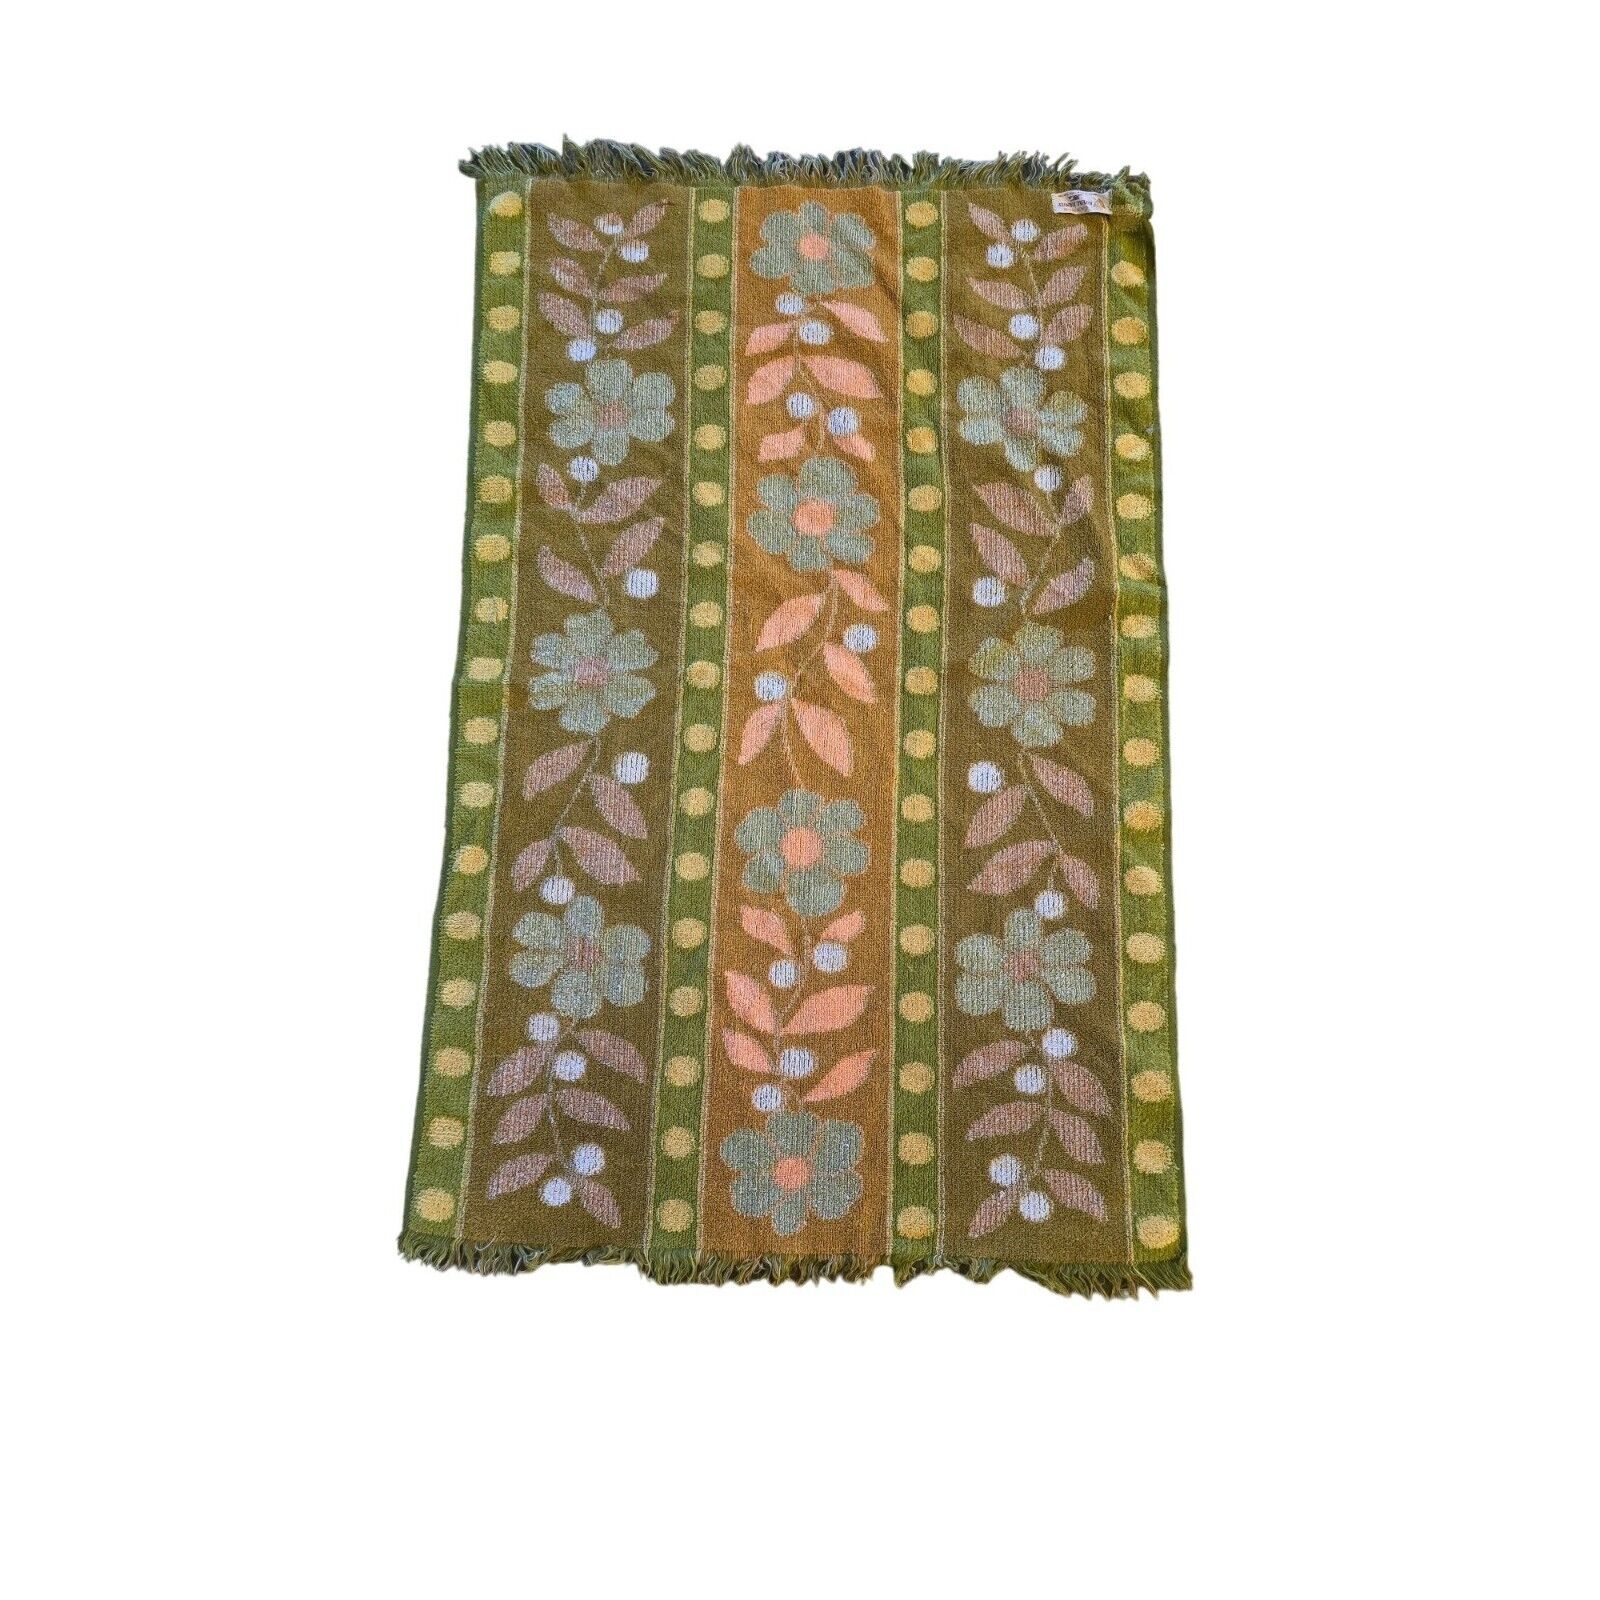 Vintage Cannon Royal Family Floral Cotton Woven Towel Mid-Century Green & Orange